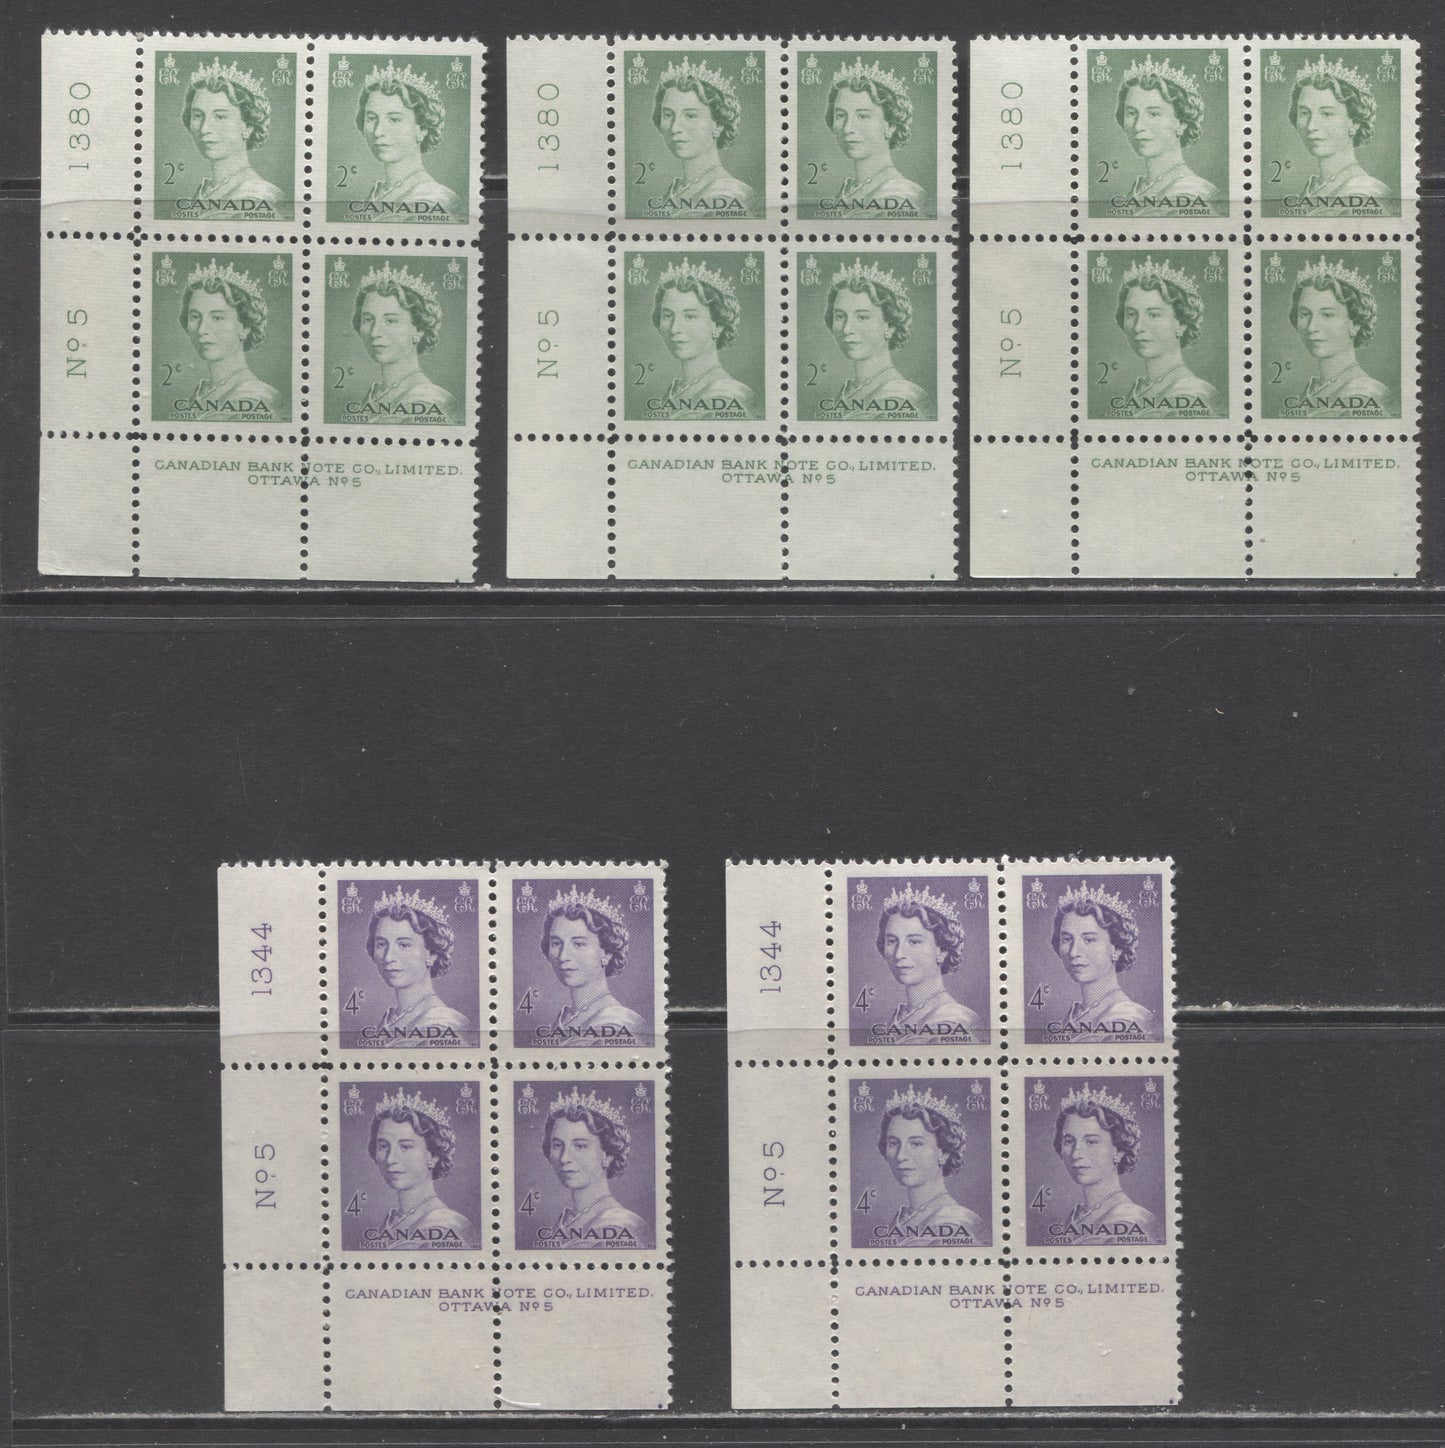 Lot 262 Canada #326, 328 2c, 4c Pale Green & Violet Queen Elizabeth II, 1953-1954 Karsh Issue, 6 VFNH LL Plate 5 Inscription Blocks, Different Perfs